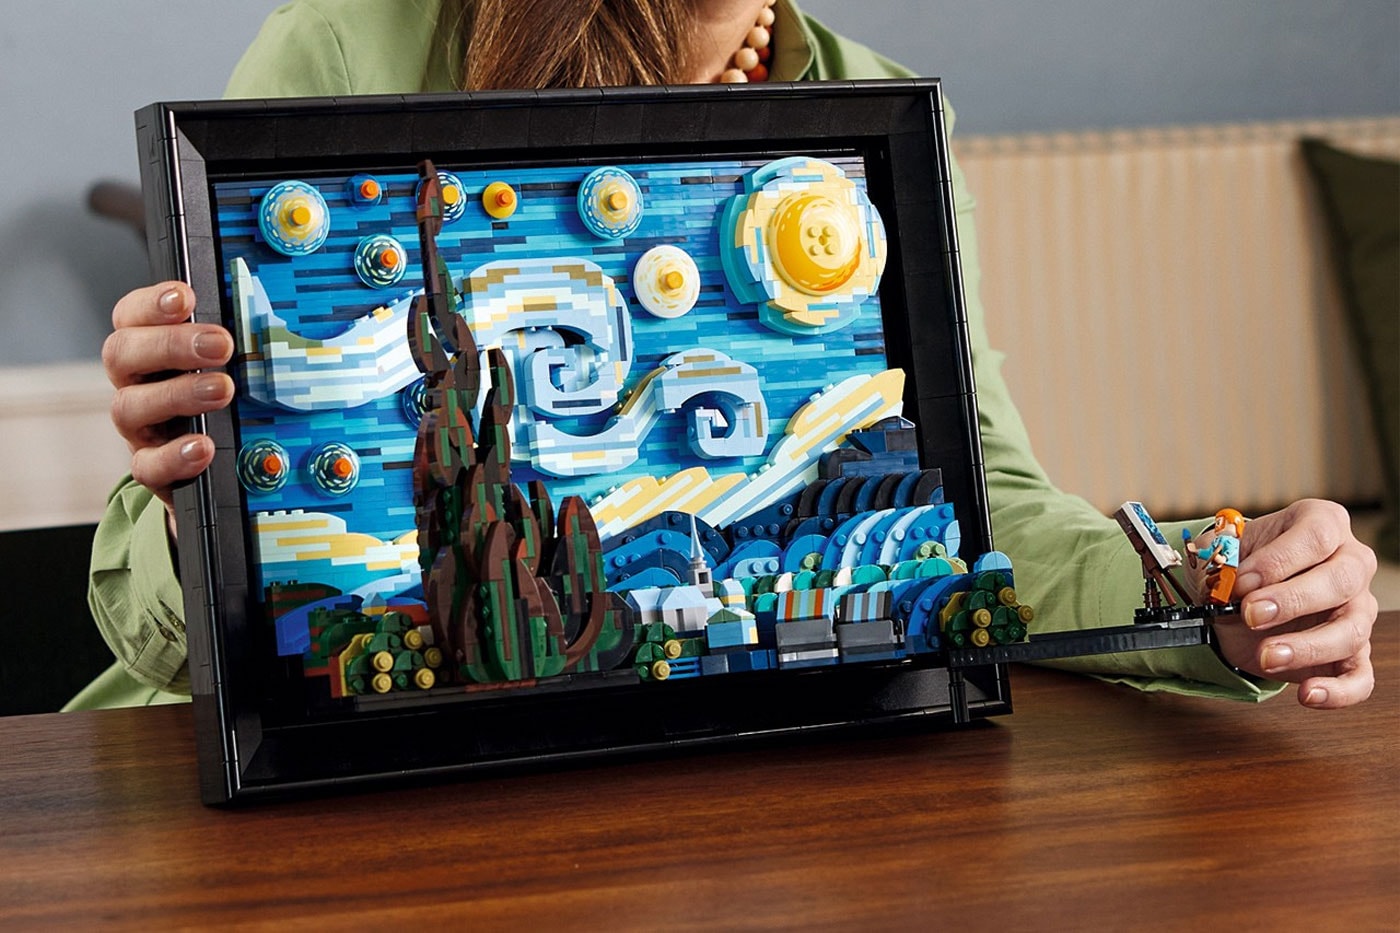 LEGO IDEAS - Vincent van Gogh: The Starry Night